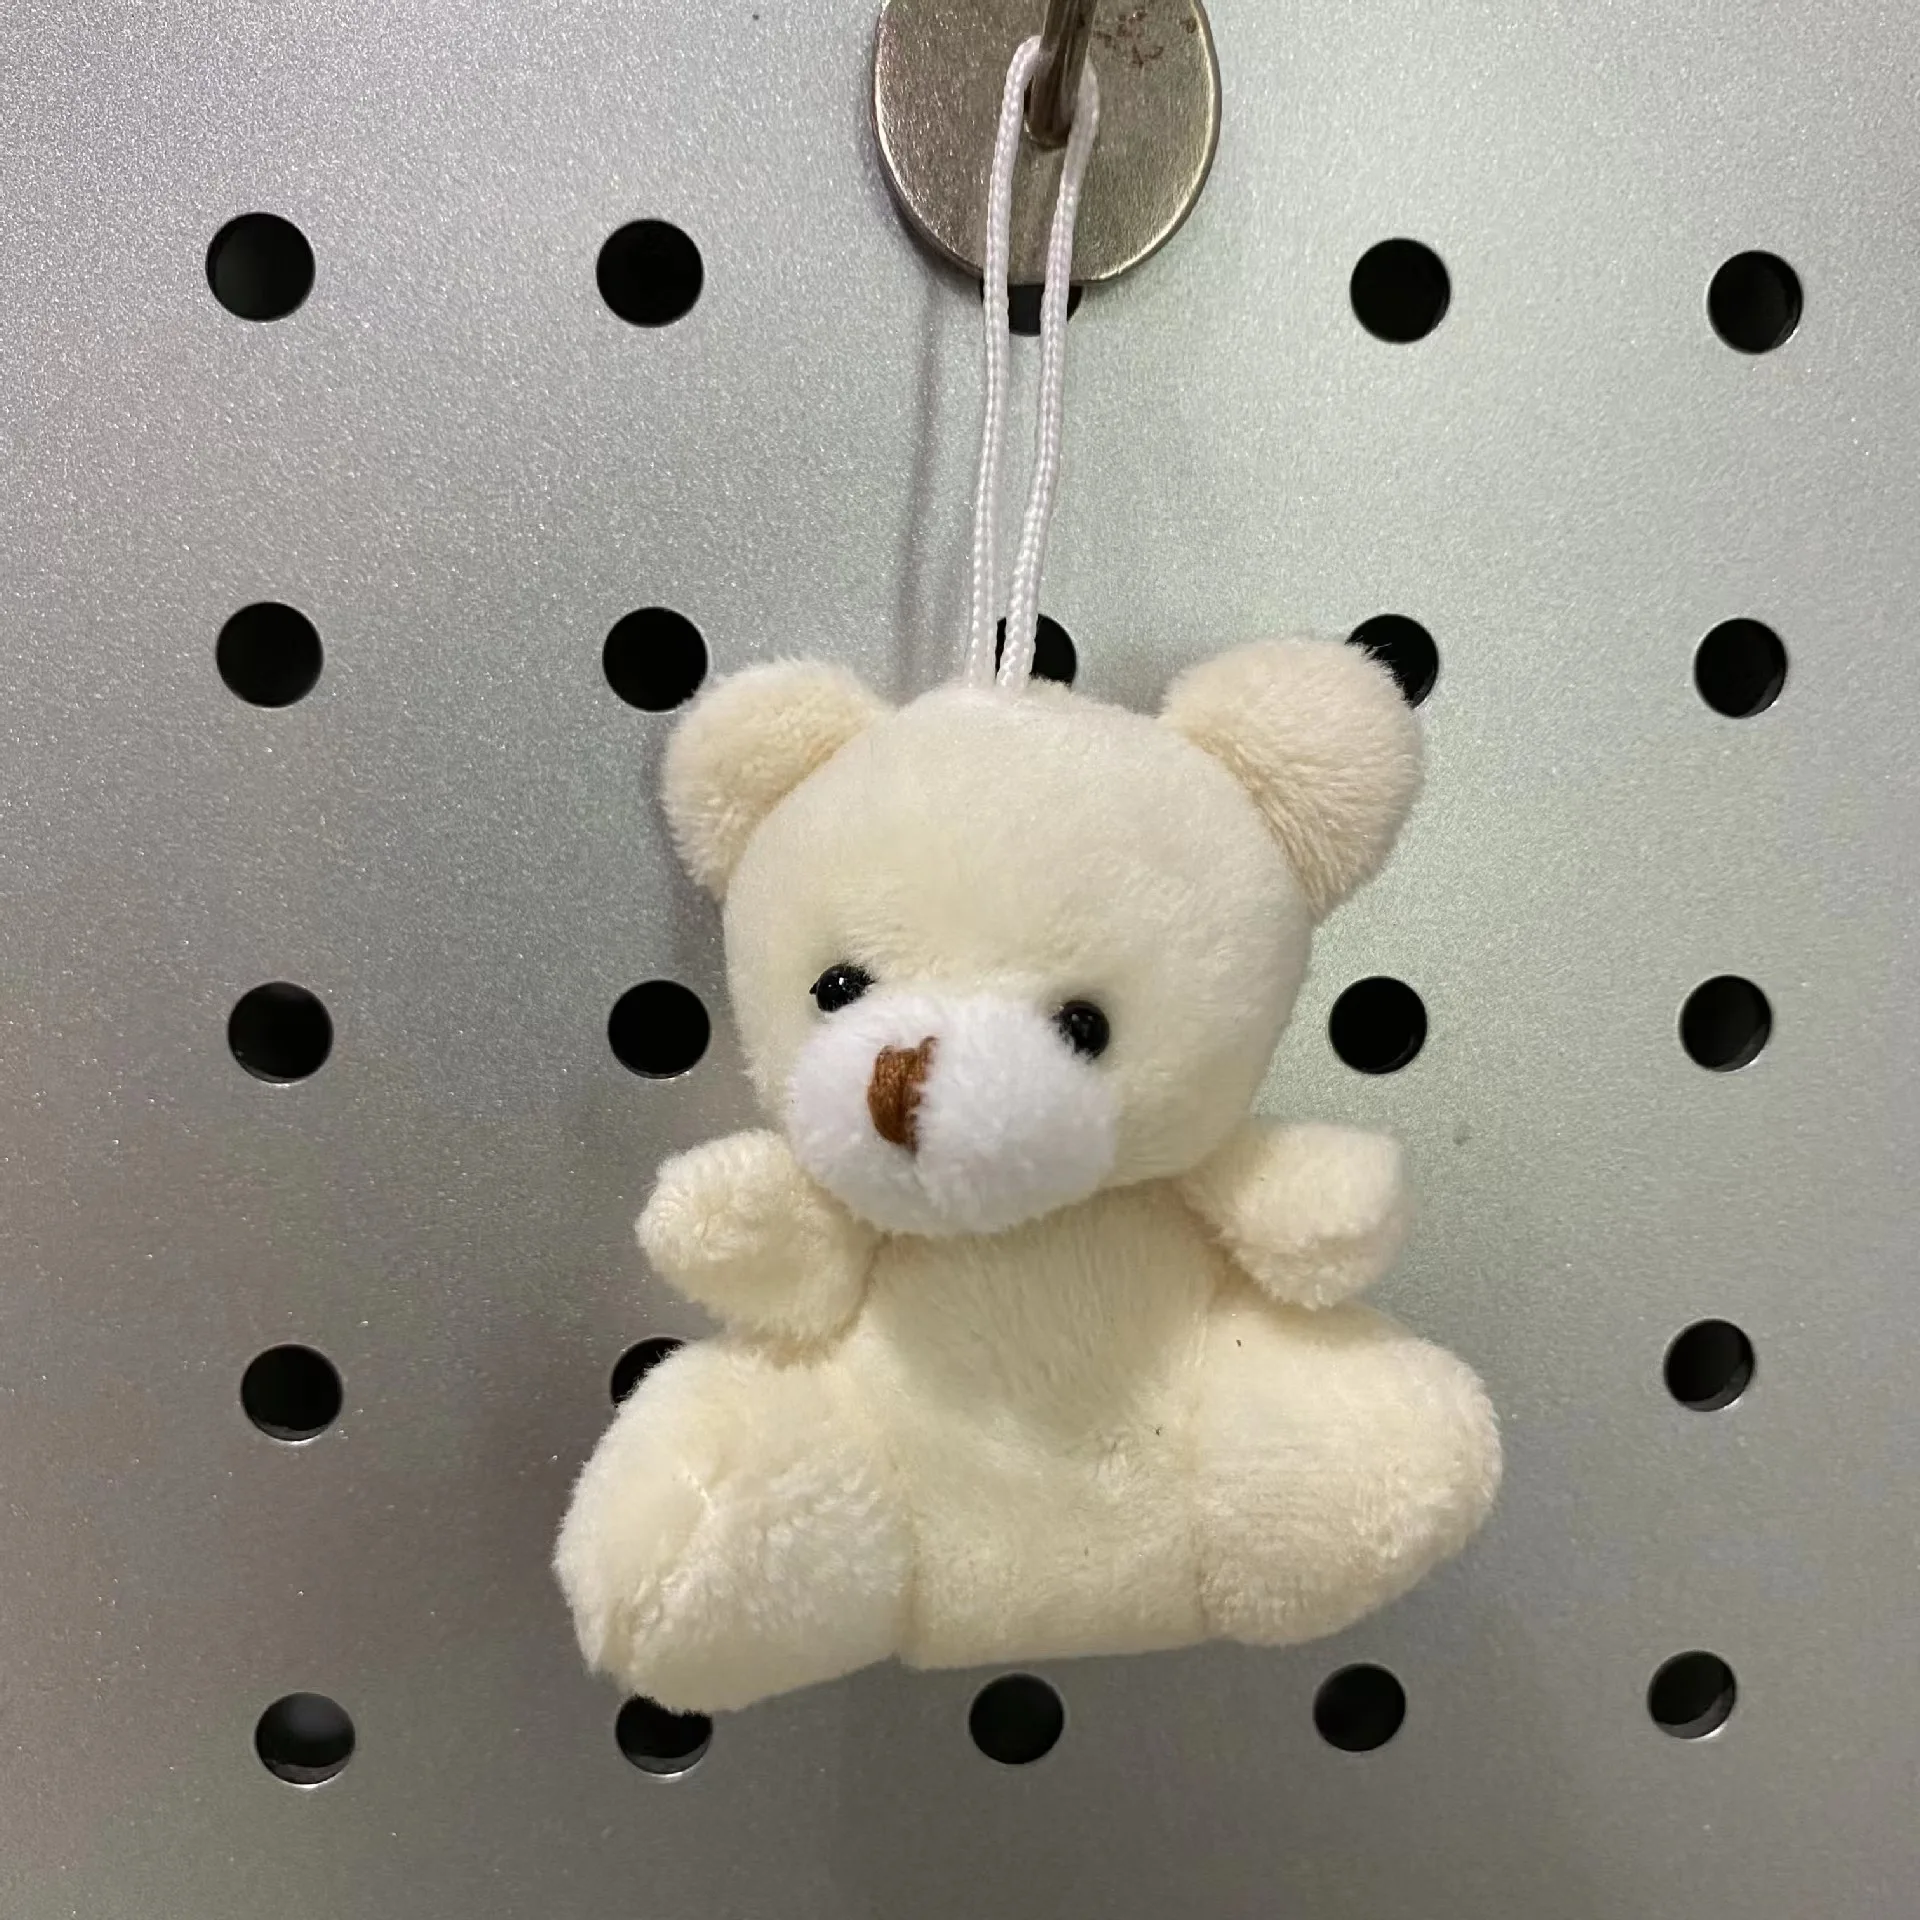  32 Piece Mini Plush Animal Toy Set, Cute Small Animals